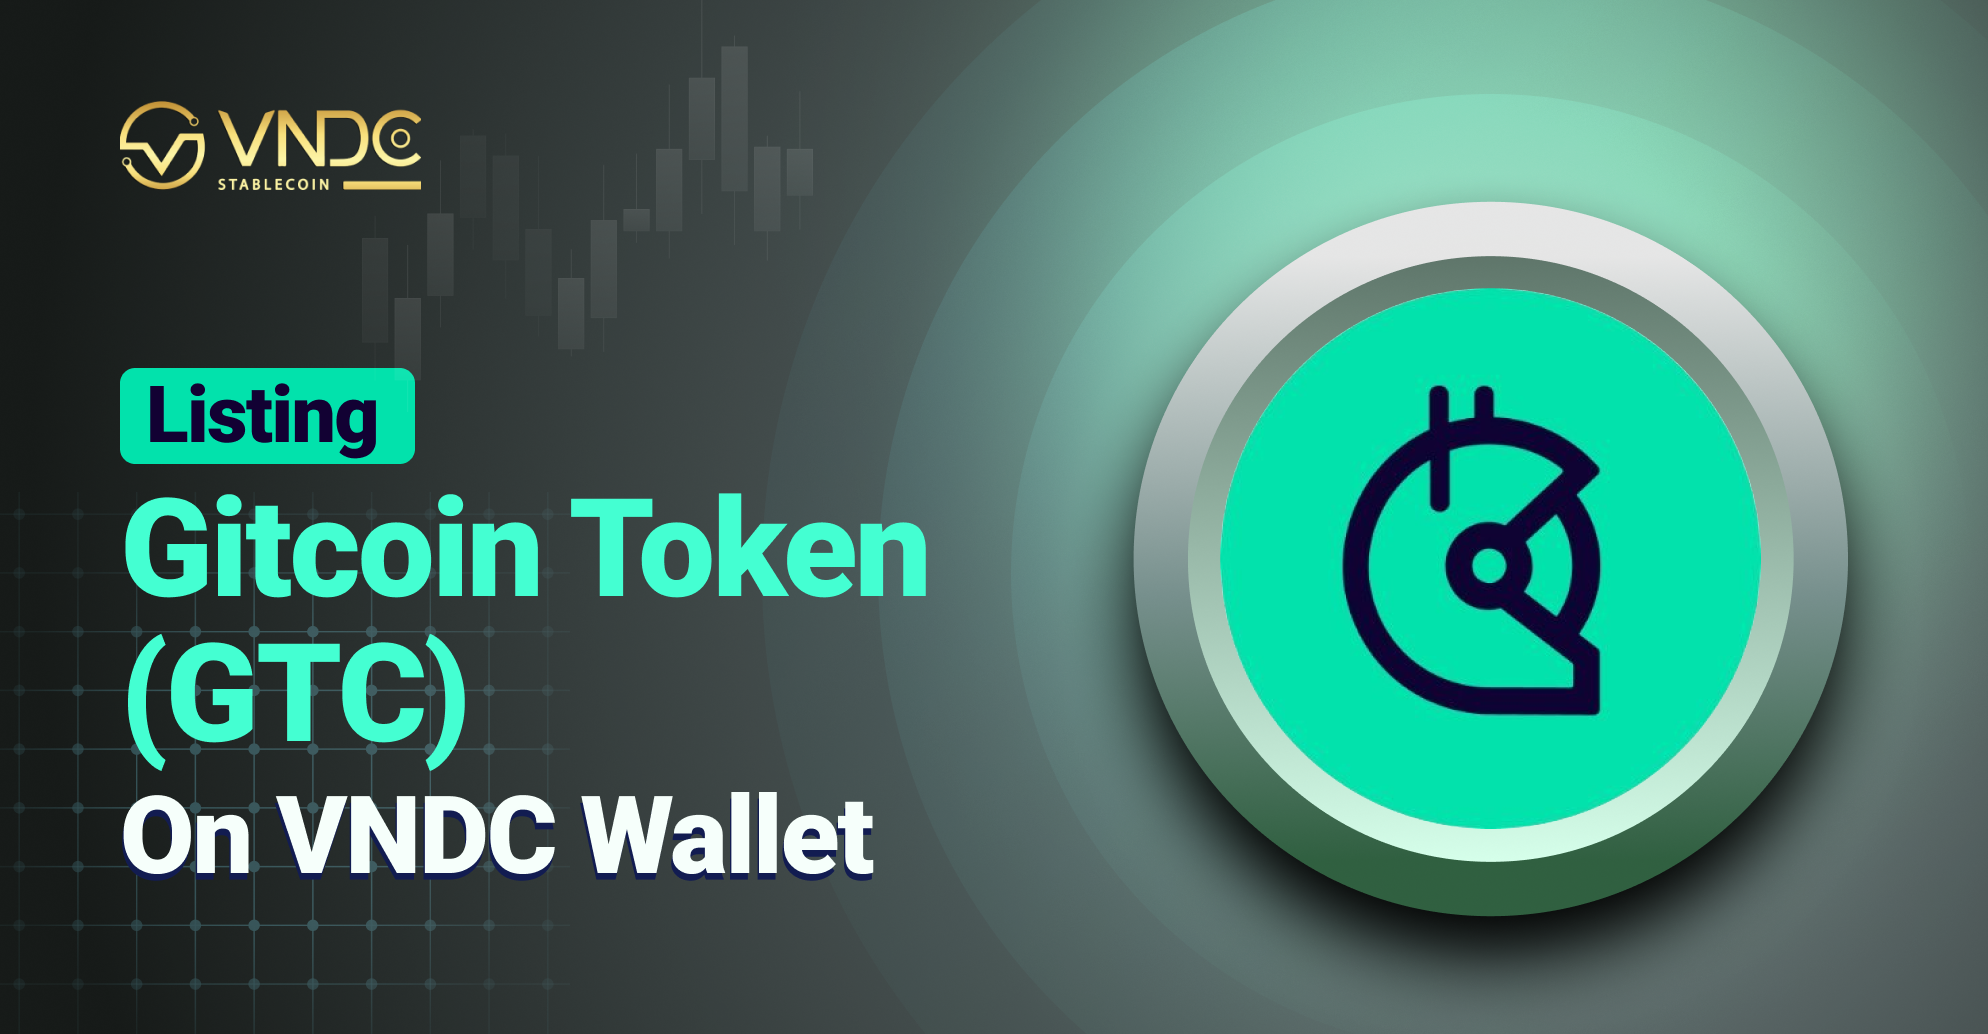 Listing Gitcoin Token (GTC) on VNDC Wallet